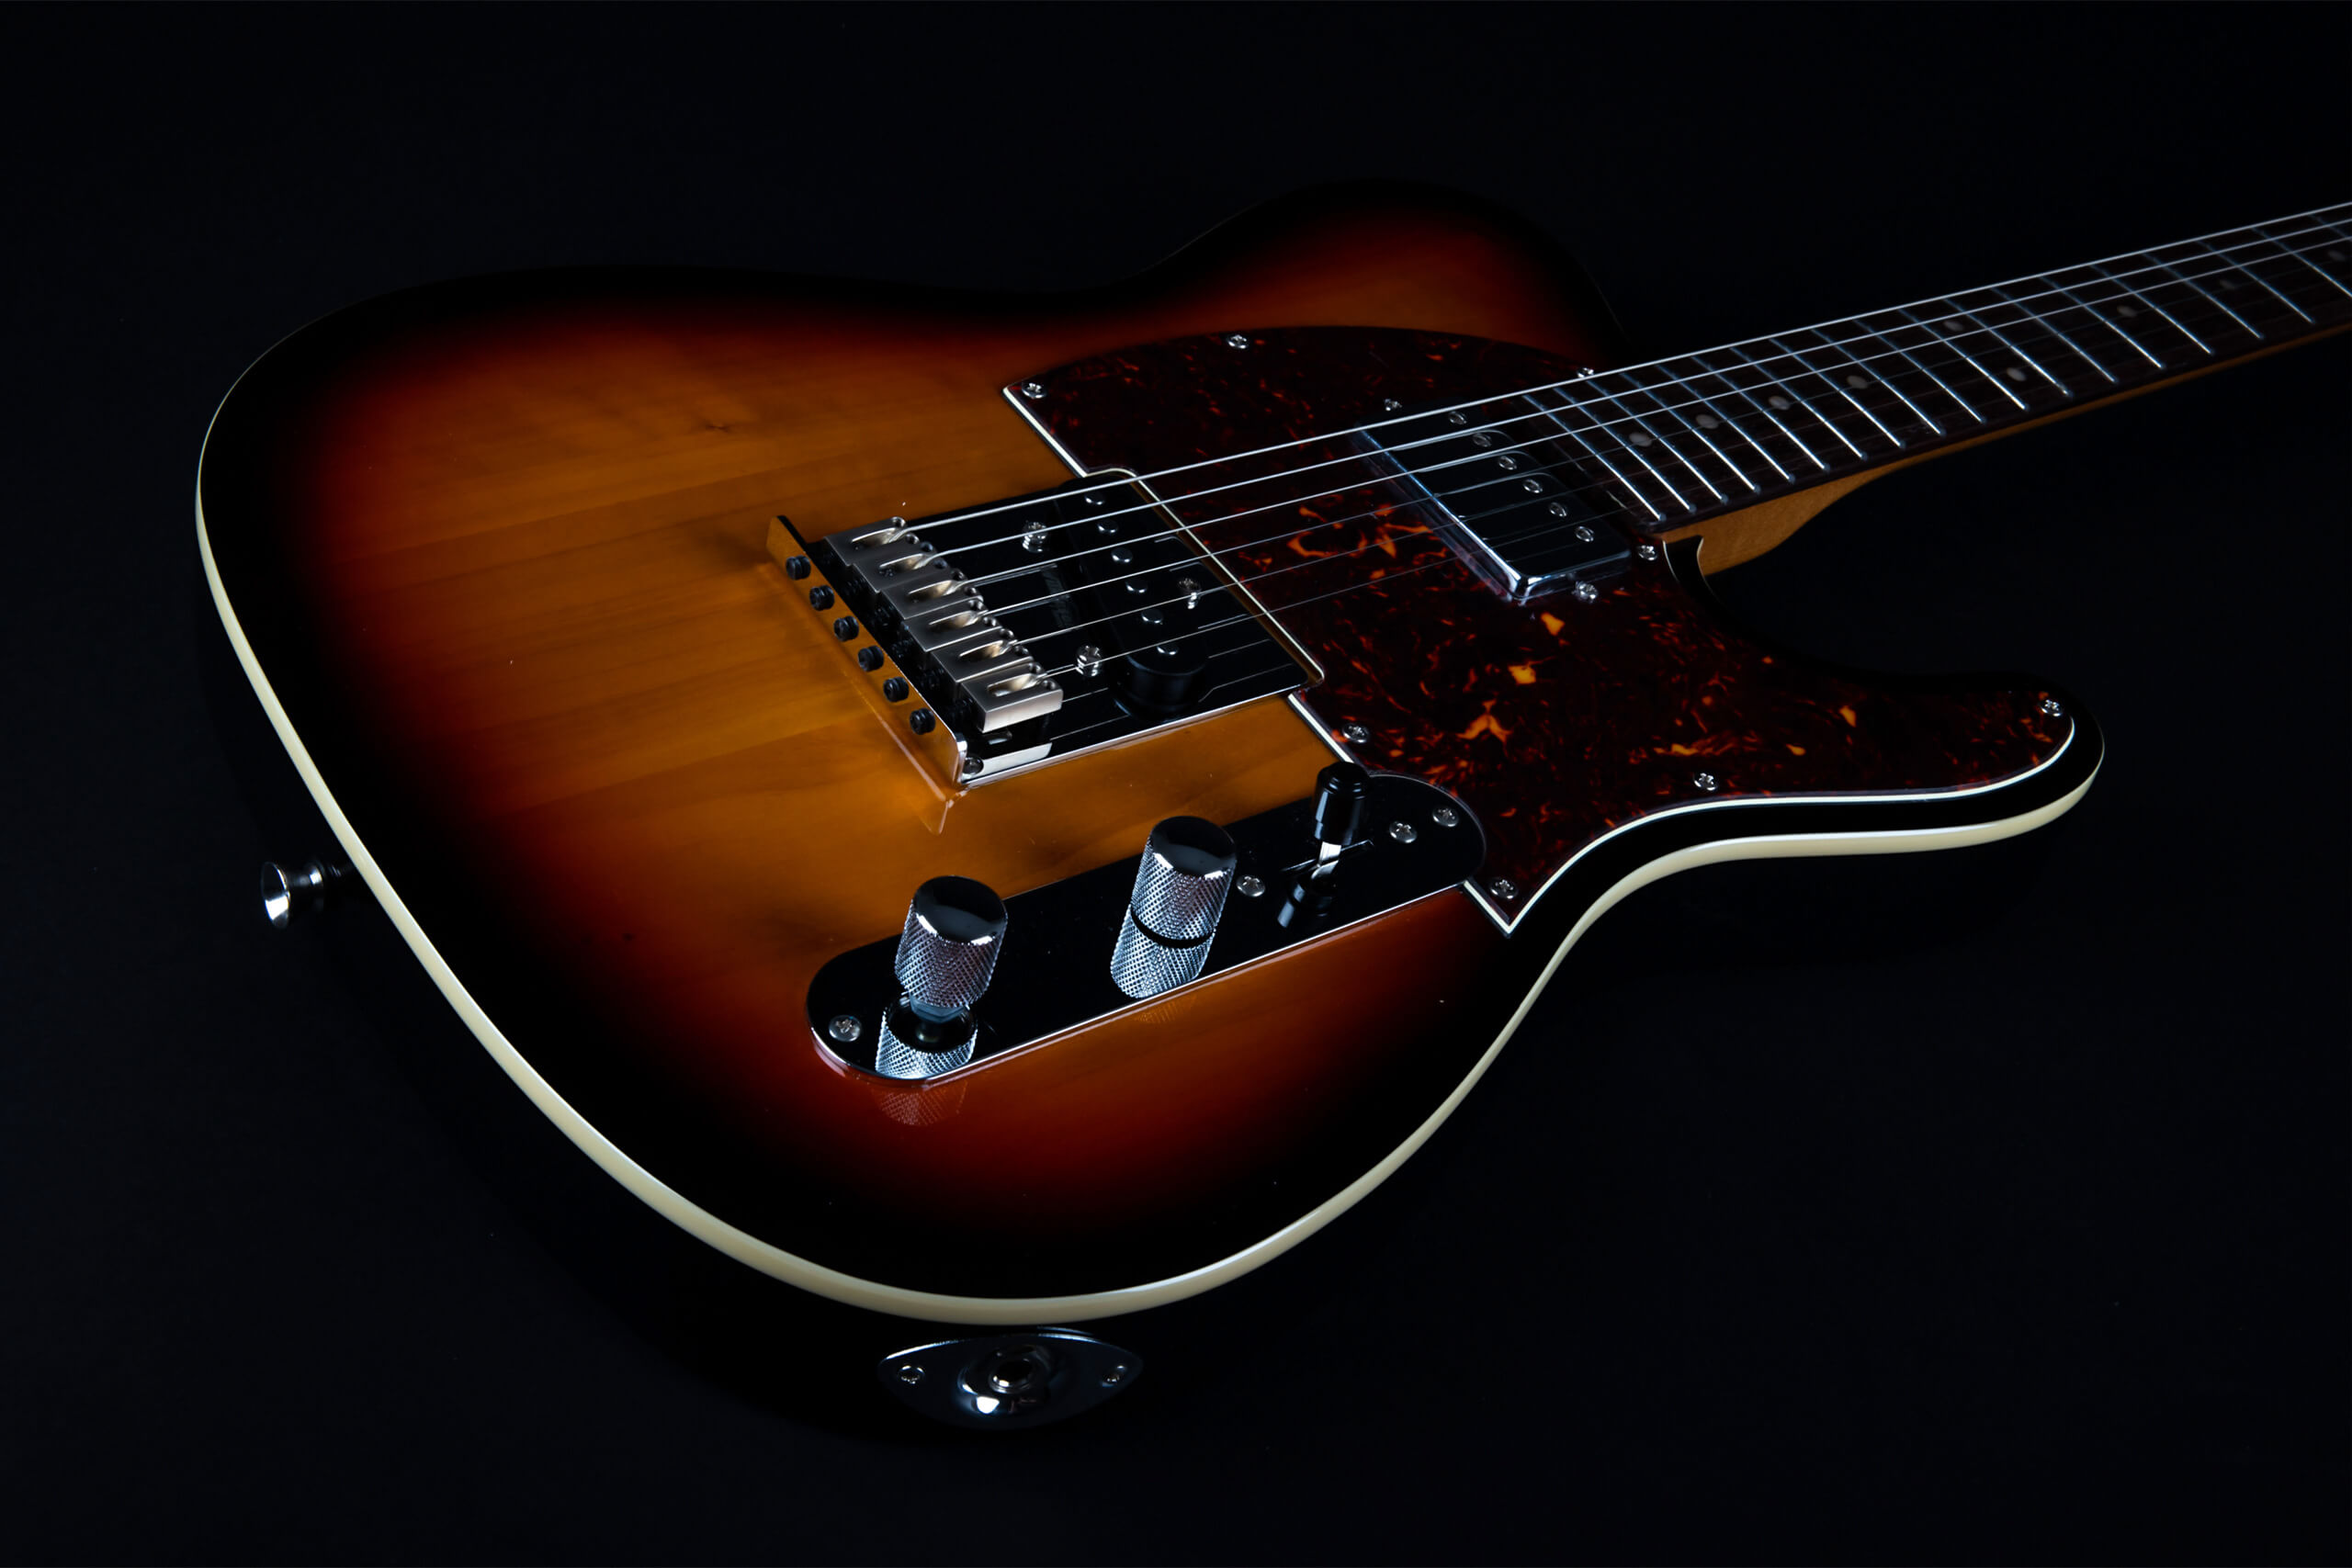 JET Guitars - JT 350 Series